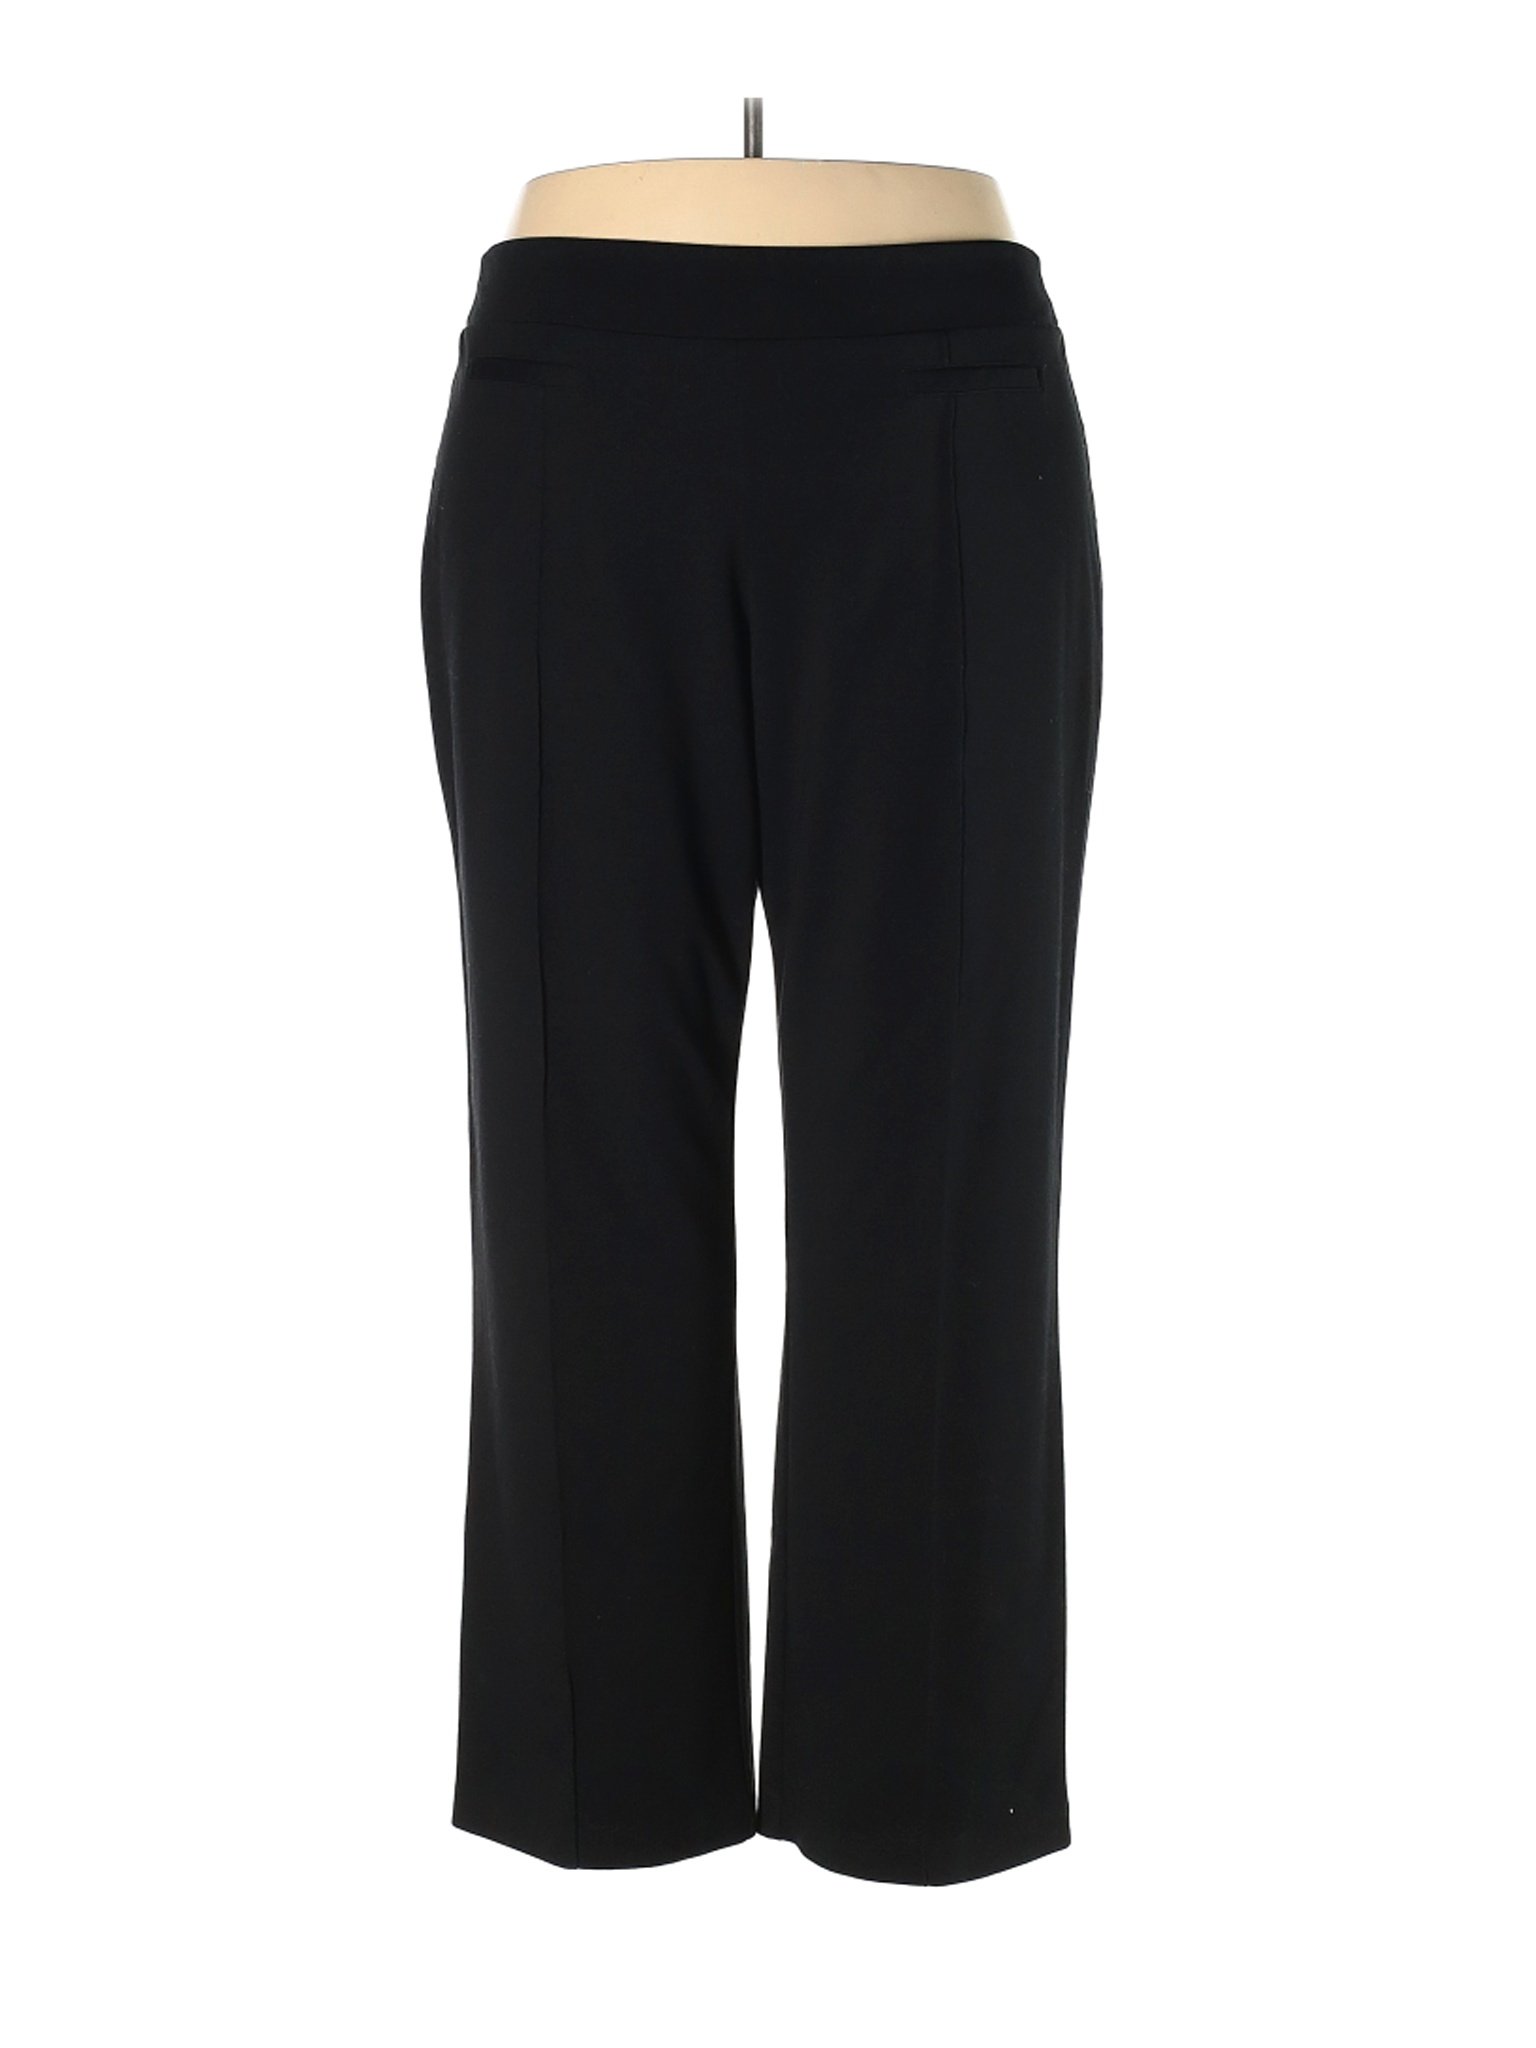 Cato Women Black Casual Pants 22 Plus | eBay